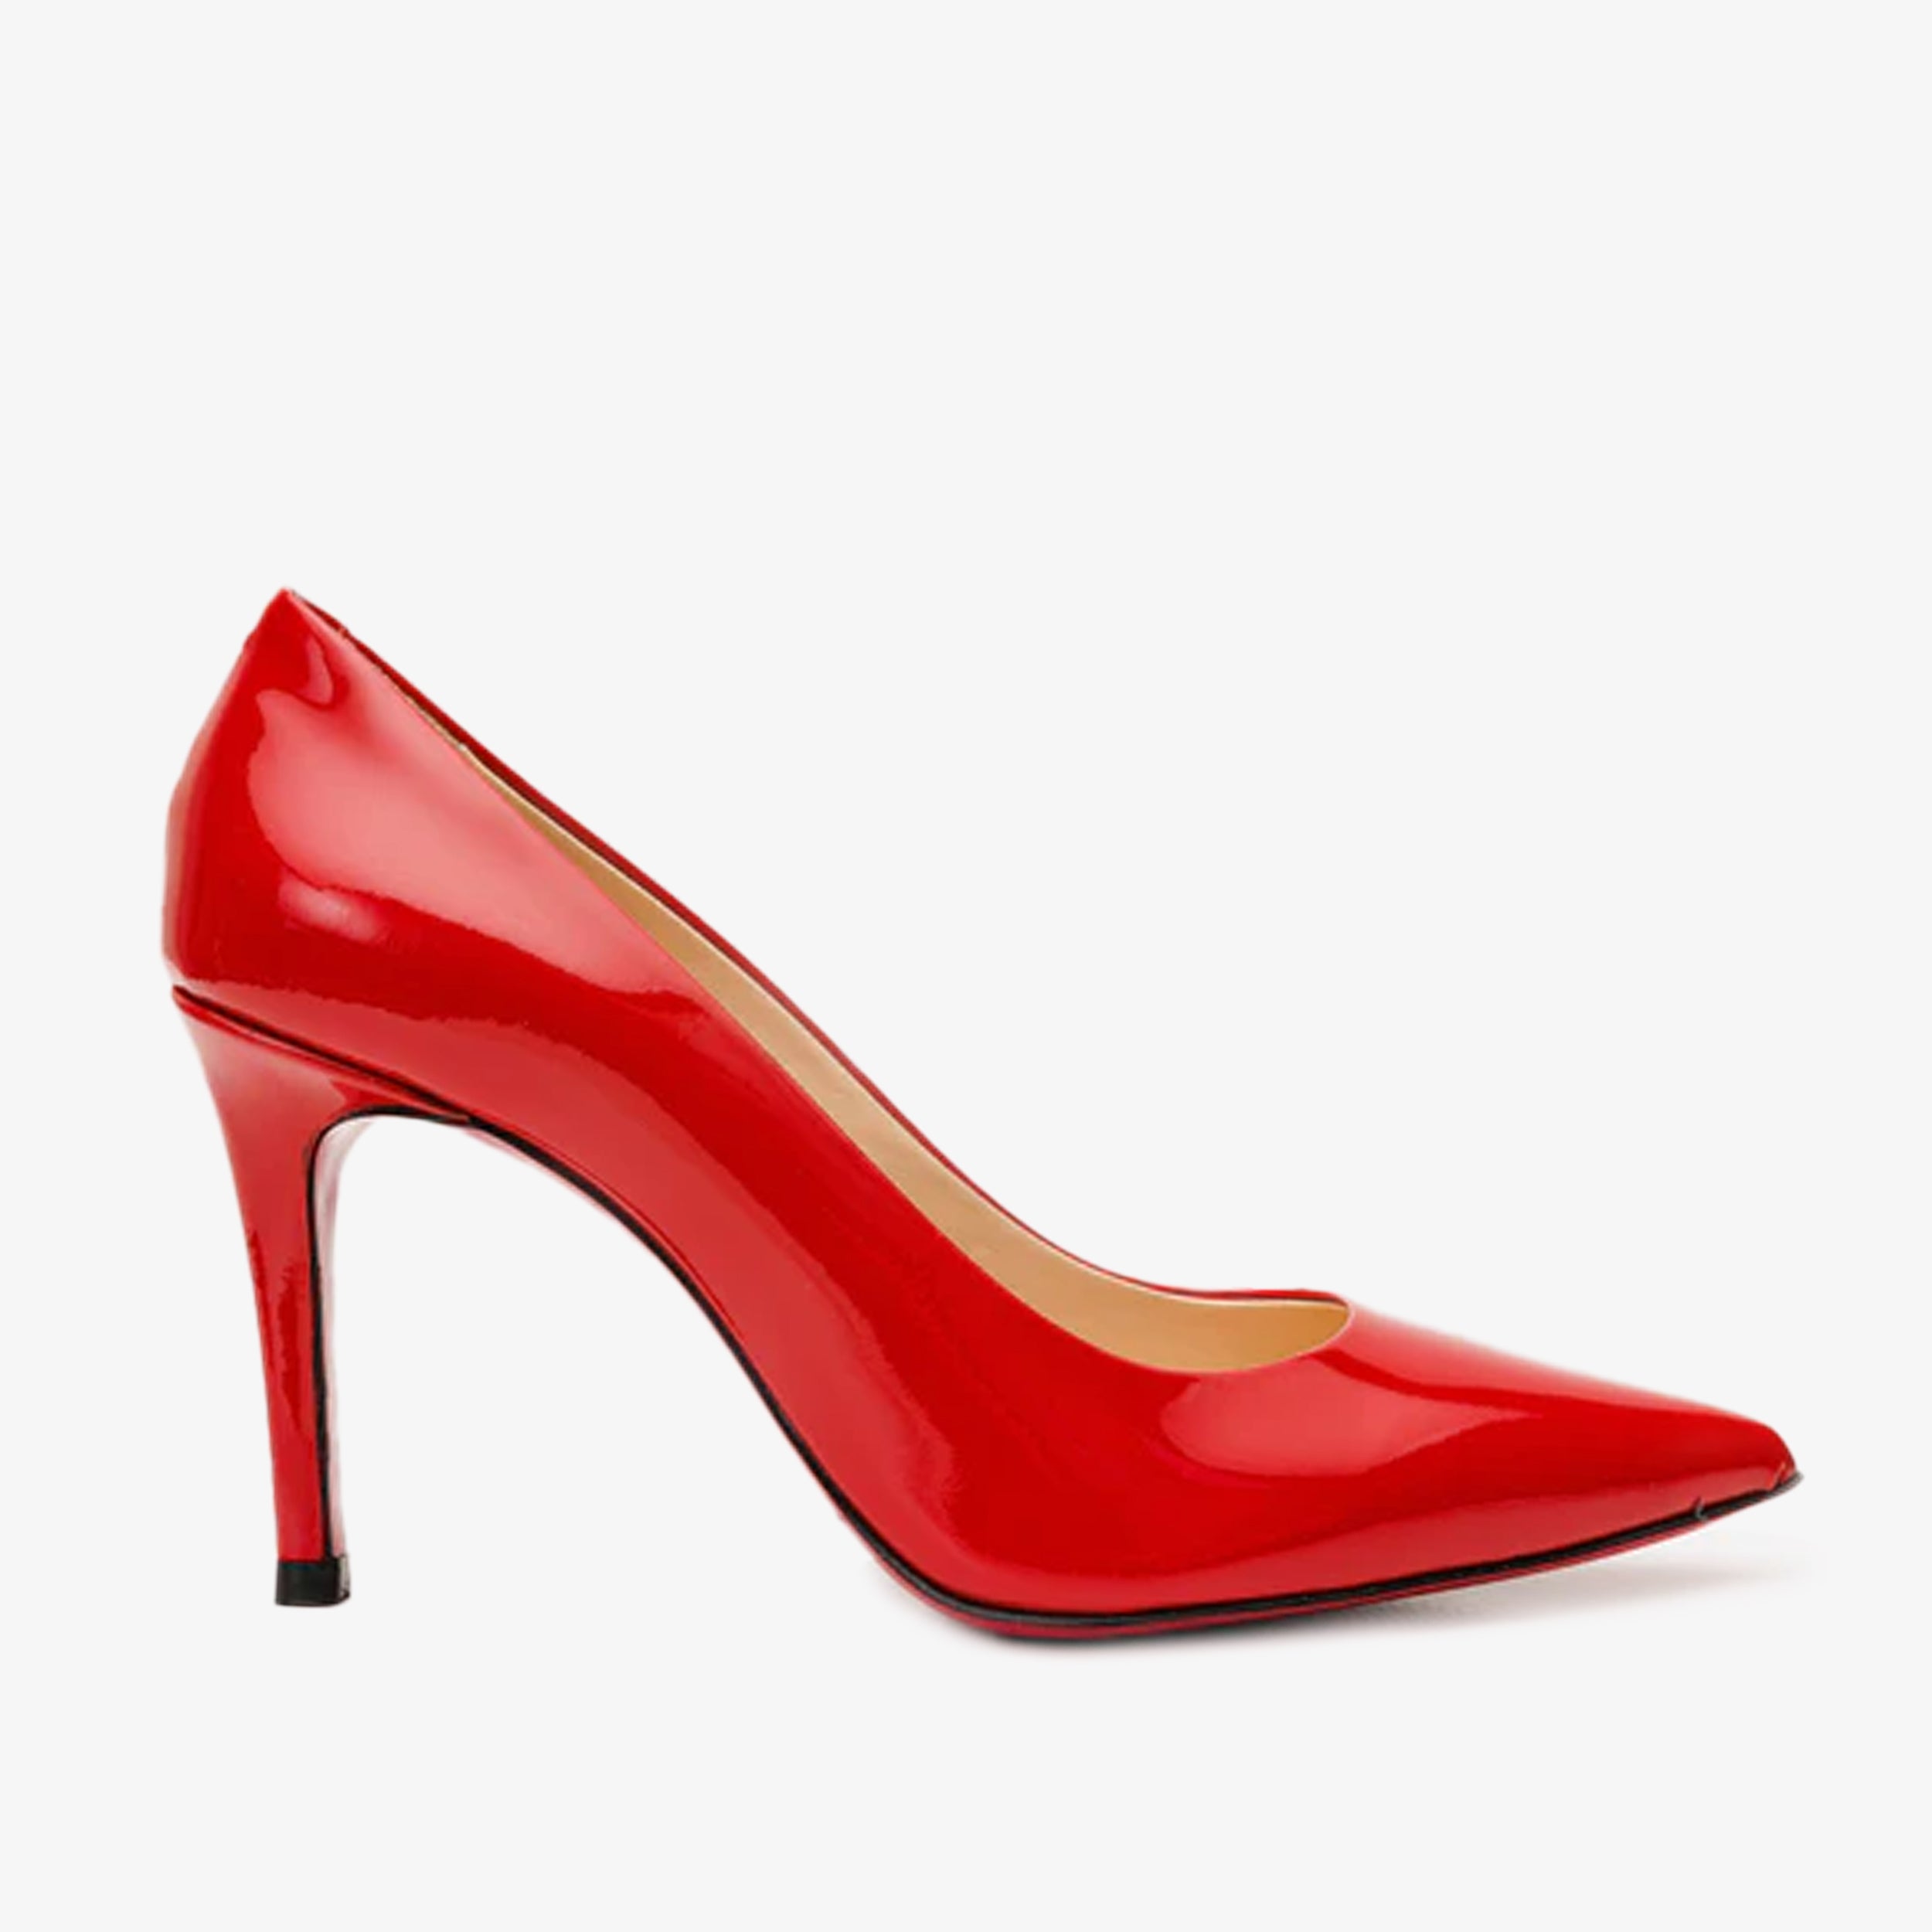 The Ege Red Leather Pump Fuchsia Sole Women Shoe